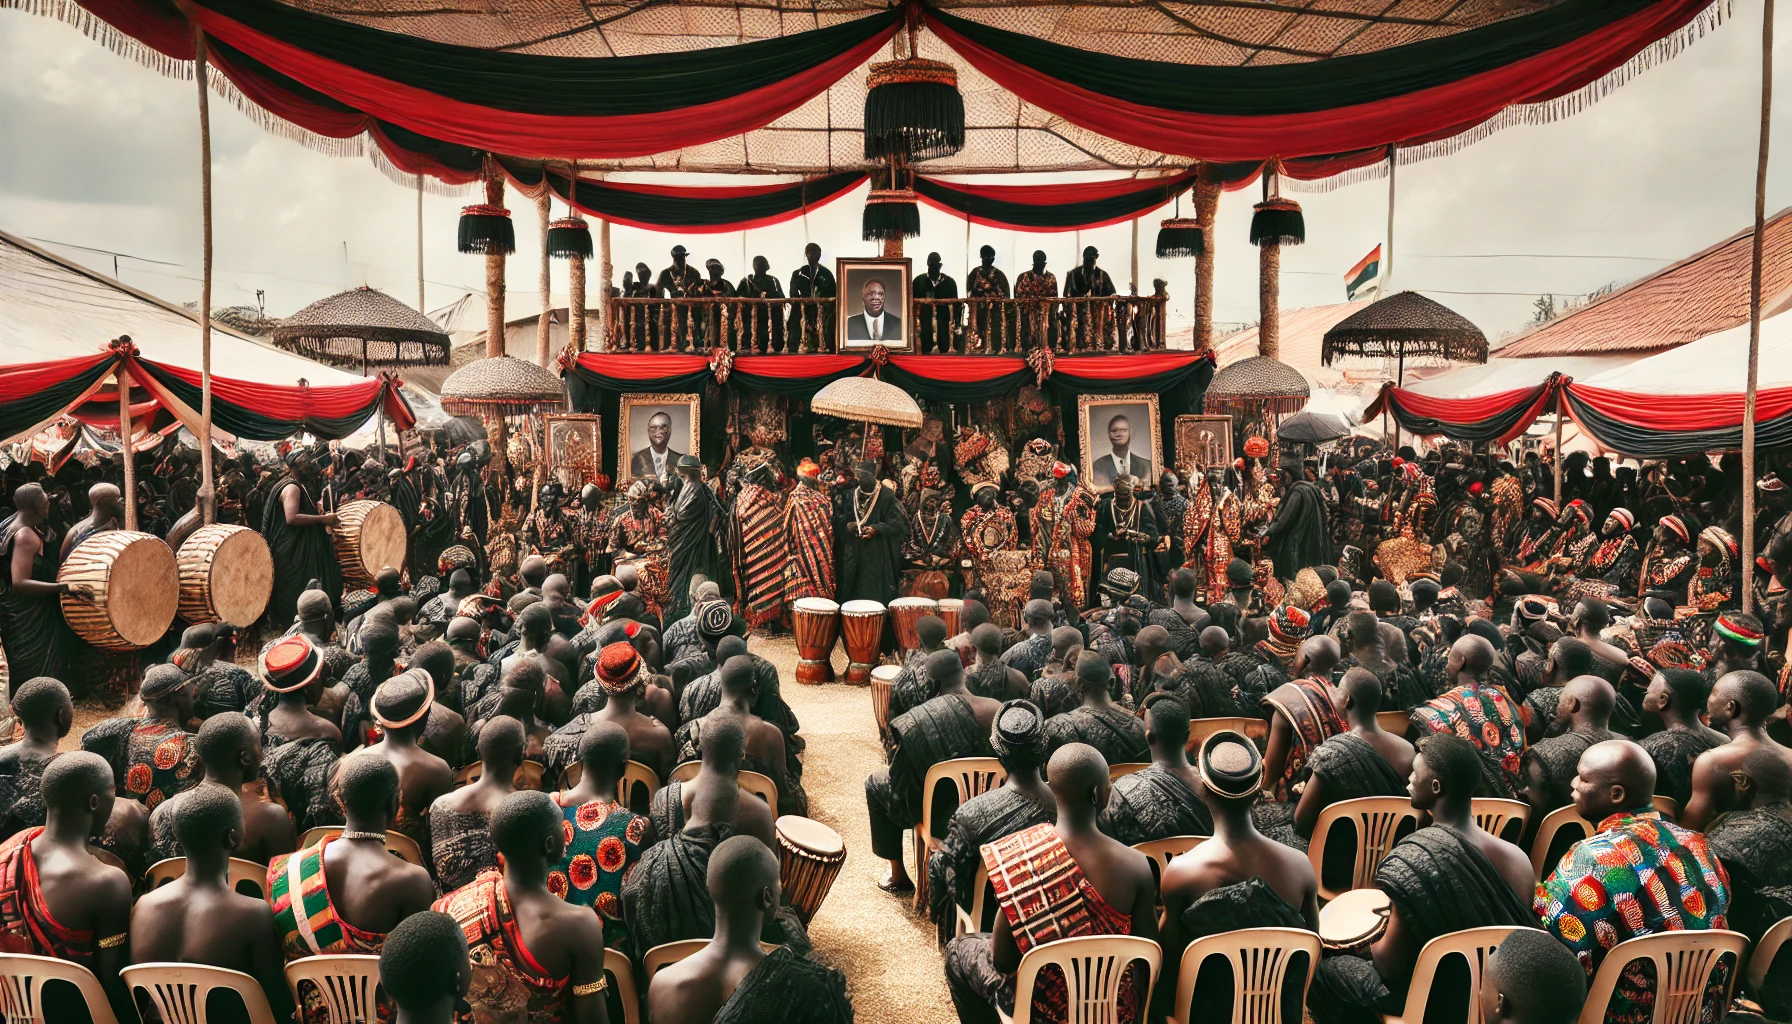 The Edibo funeral performance among the Effutus in Ghana.